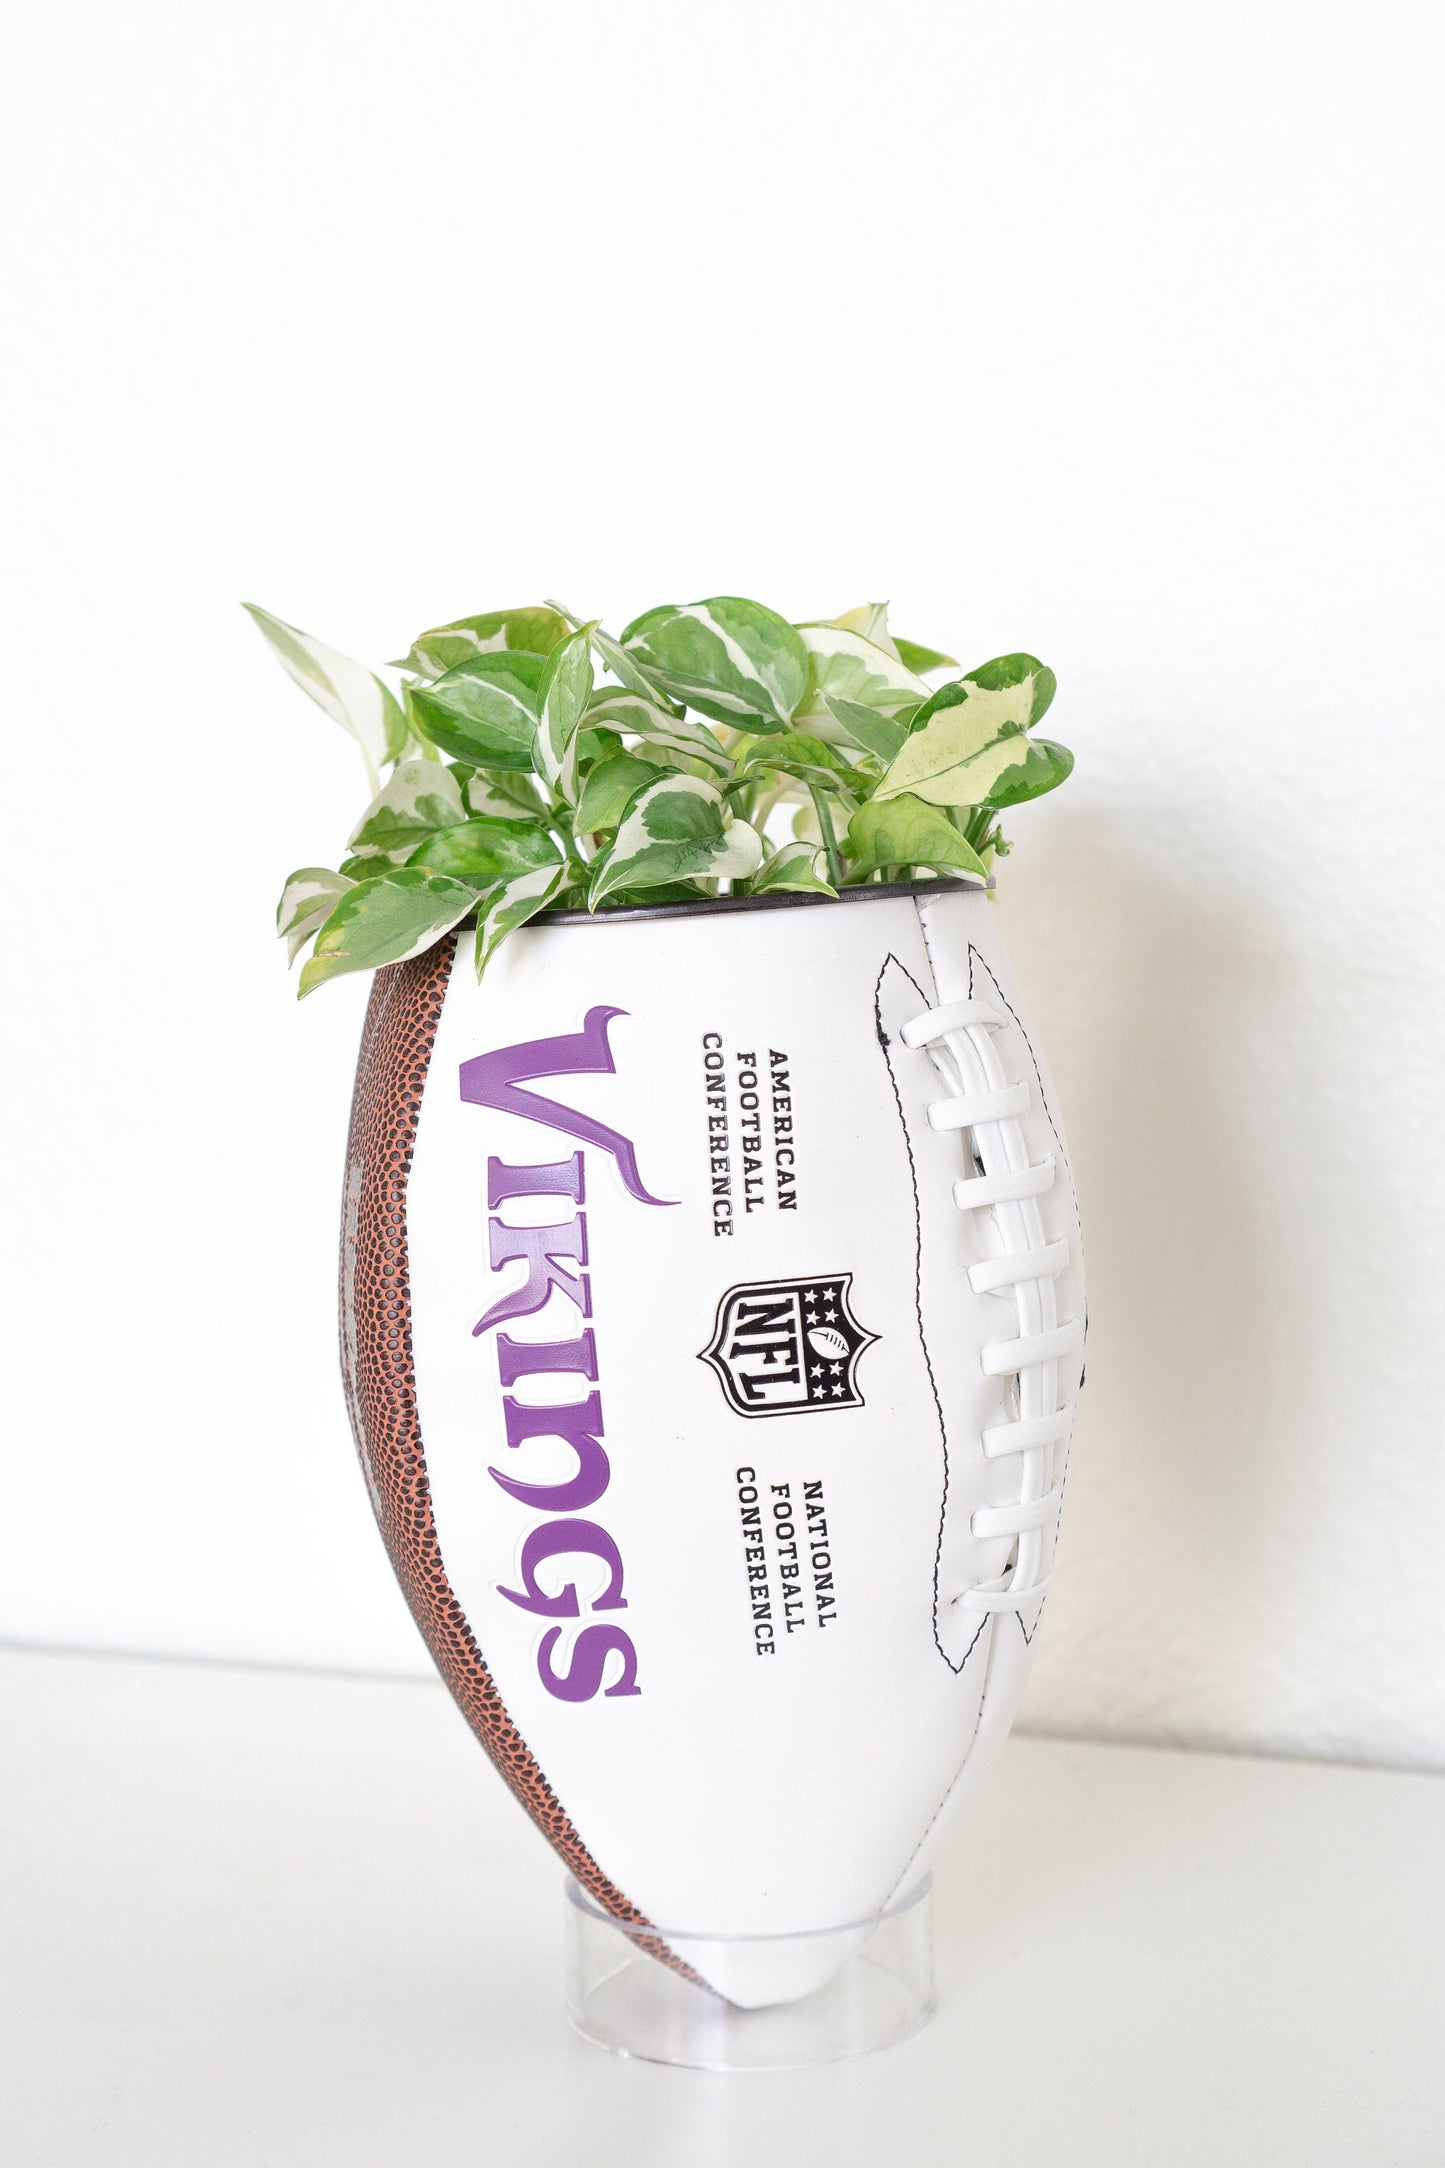 plntrs - NFL Minnesota Vikings Team Wilson Football planter Playoffs superbowl - with stand